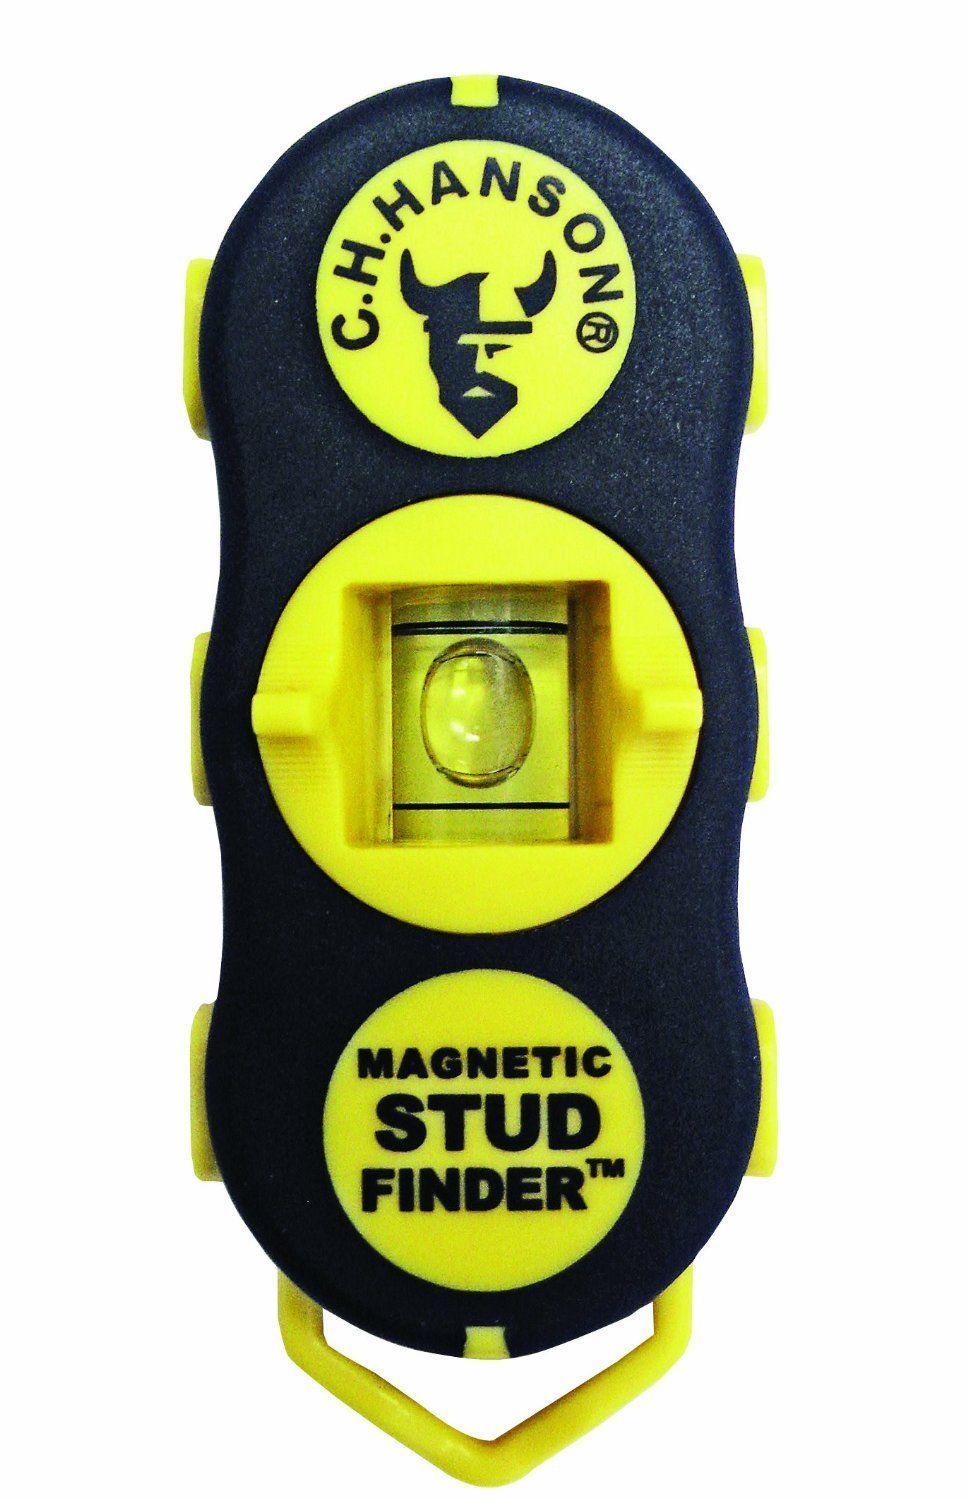 CH Hanson Magnetic Stud Finder, Home, Frame,Wood,Tool,Tester,Power,Sensor,Detect - $19.95